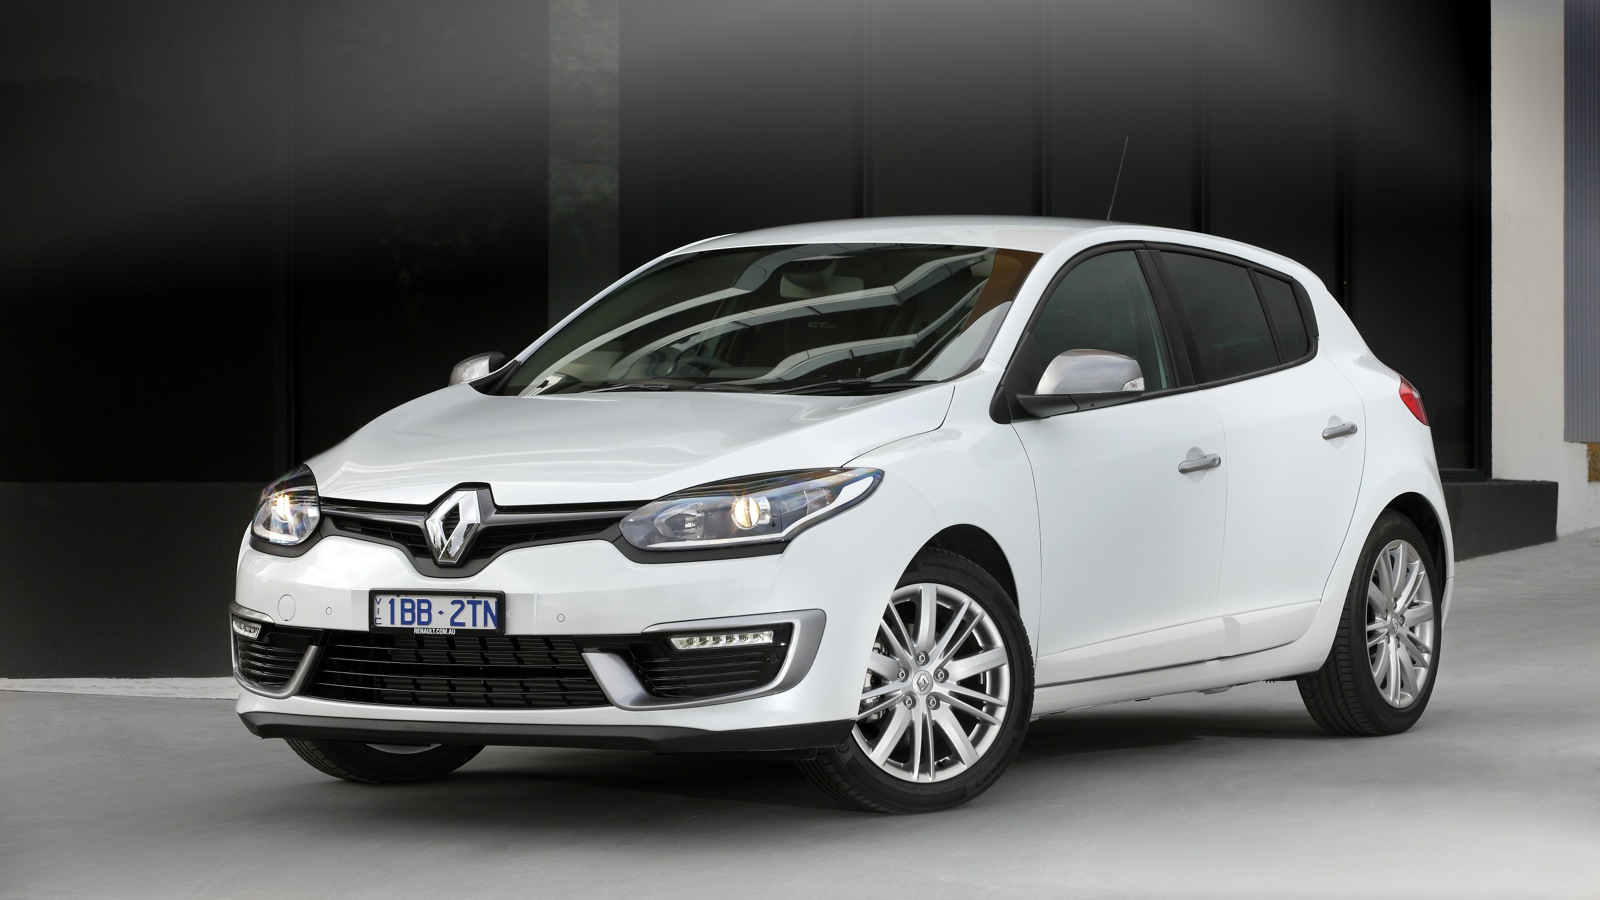 2014 Renault Megane Review - photos | CarAdvice
